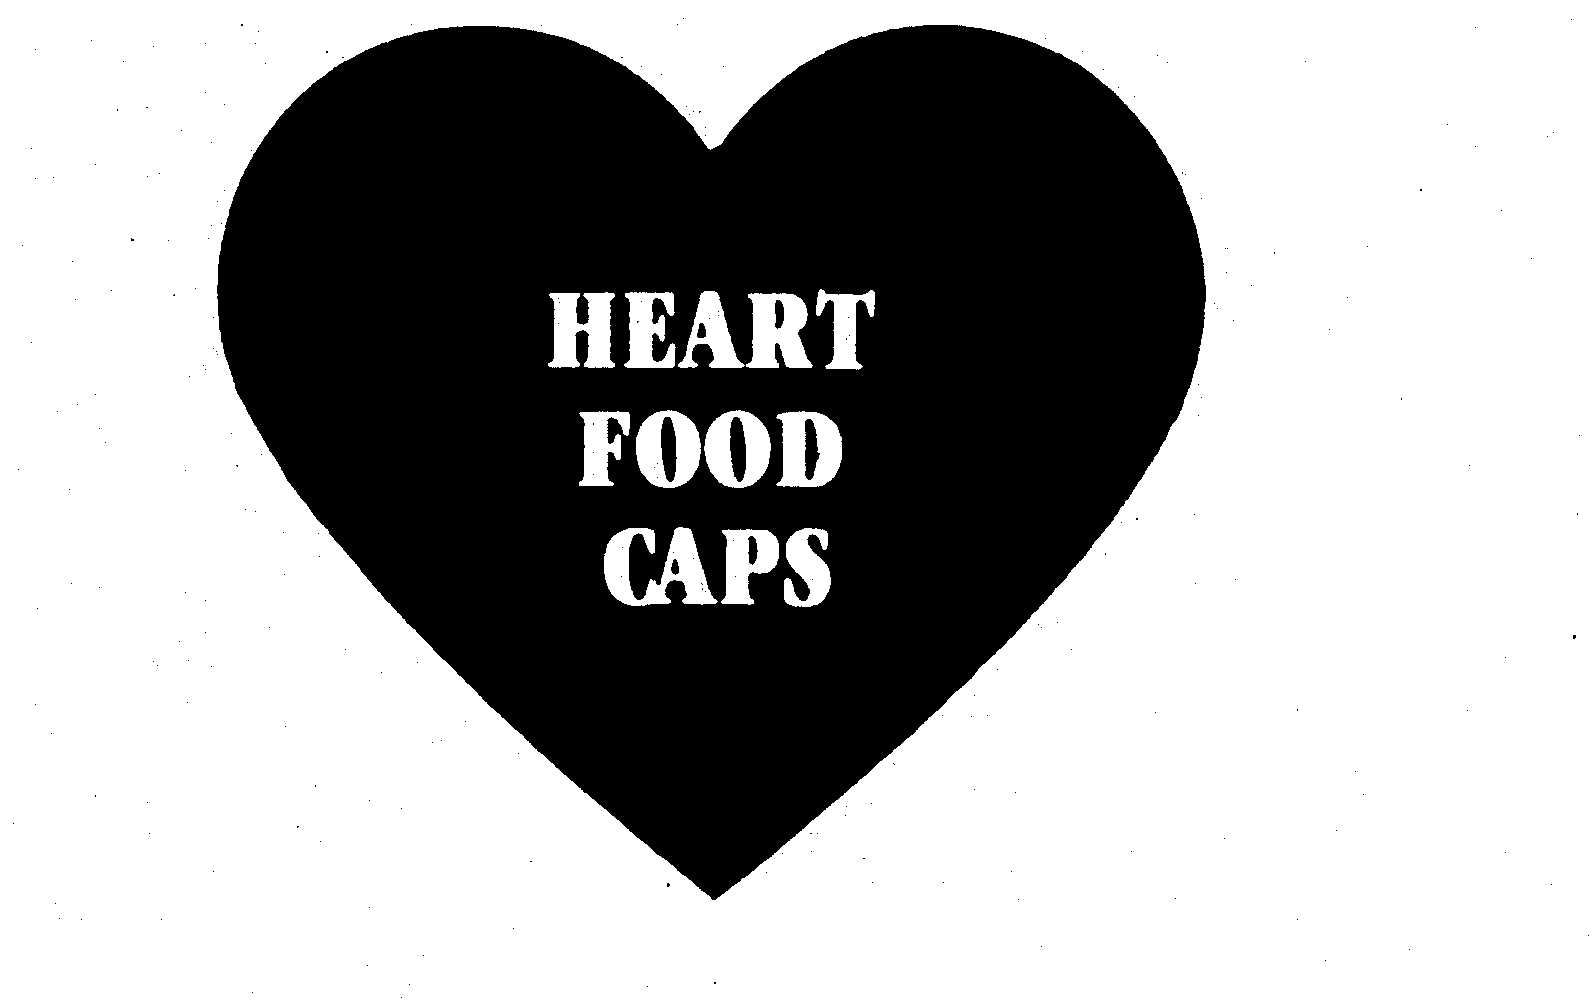  HEART FOOD CAPS